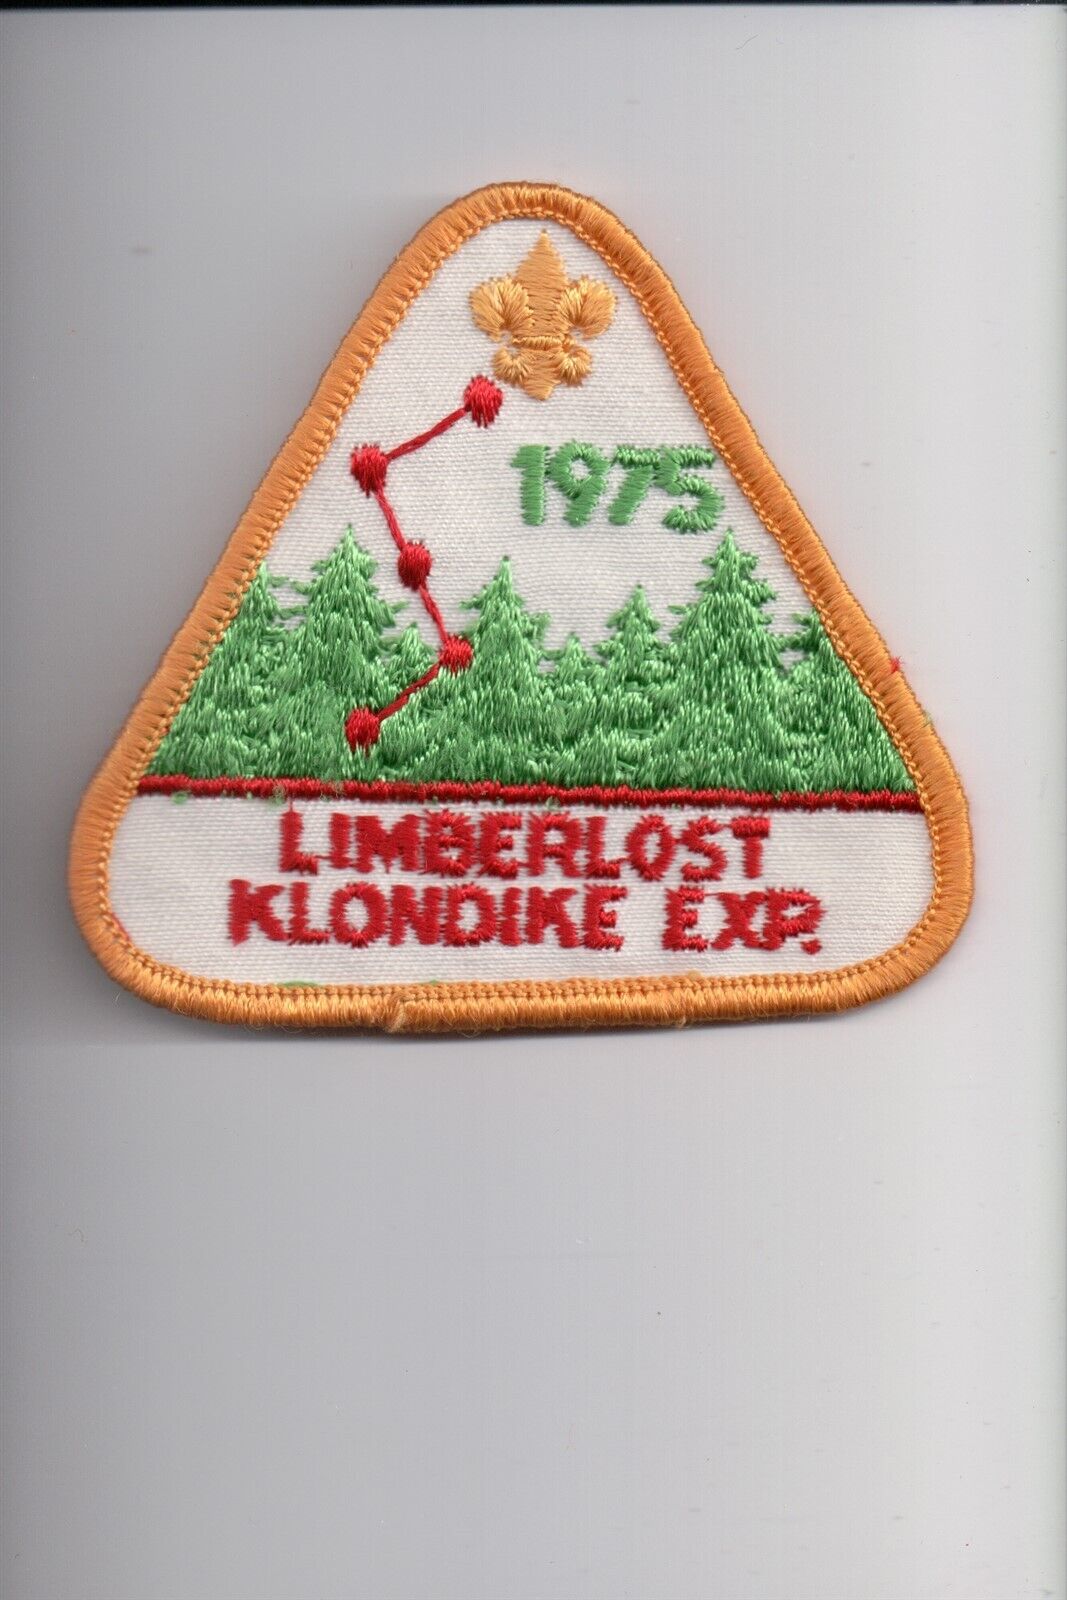 1975 Limberlost Klondike Exp. patch